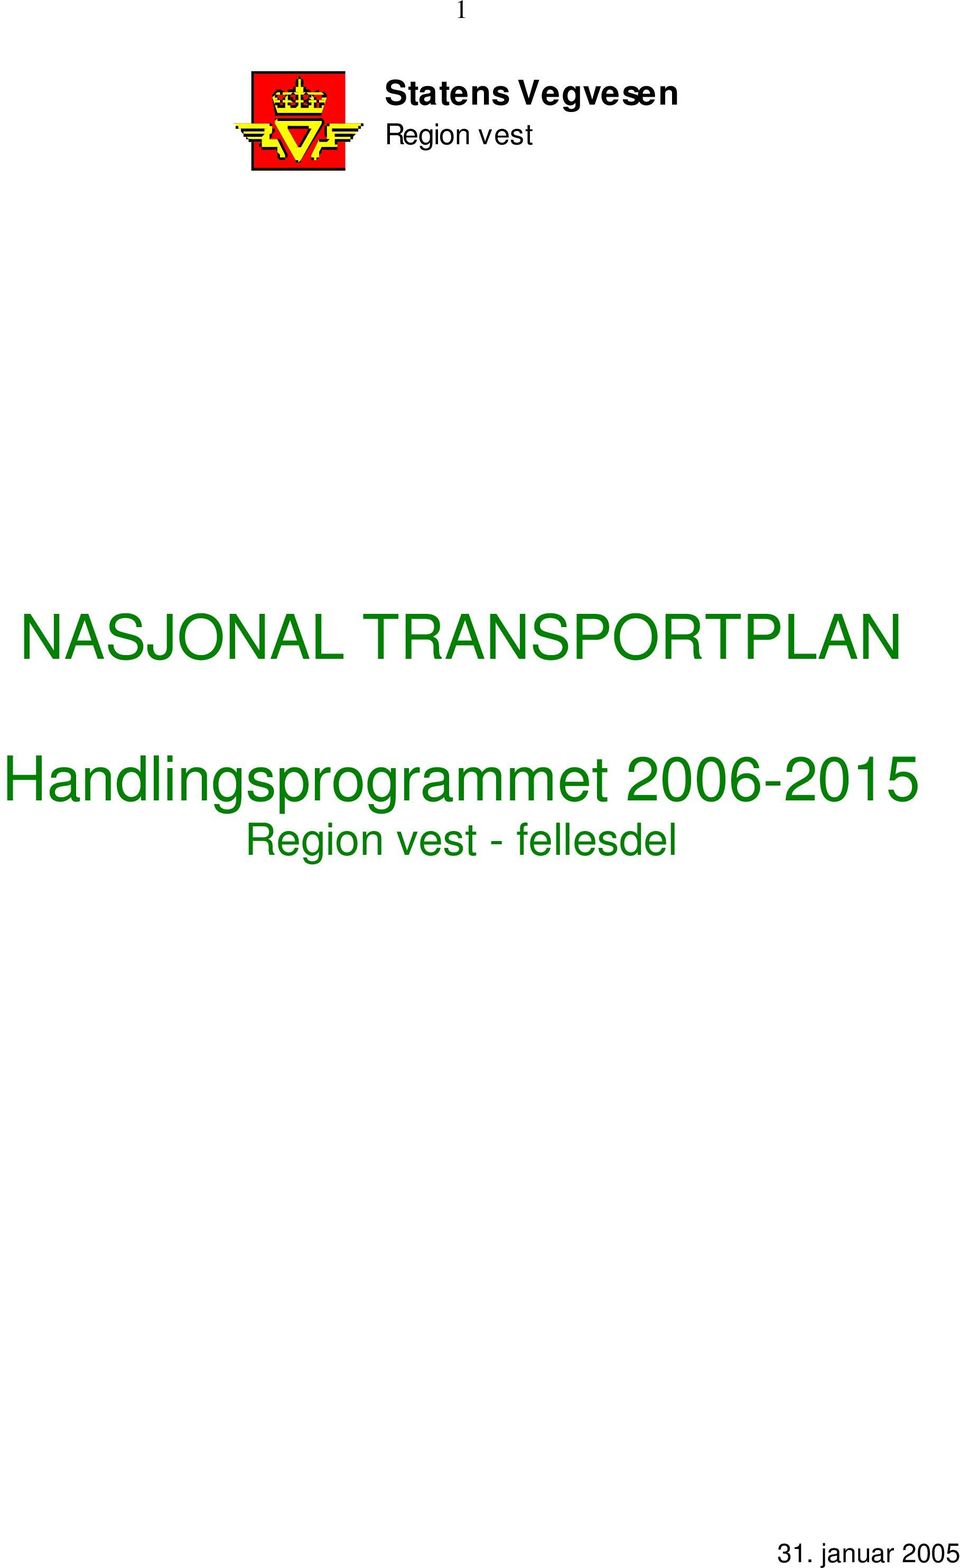 Handlingsprogrammet 2006-2015